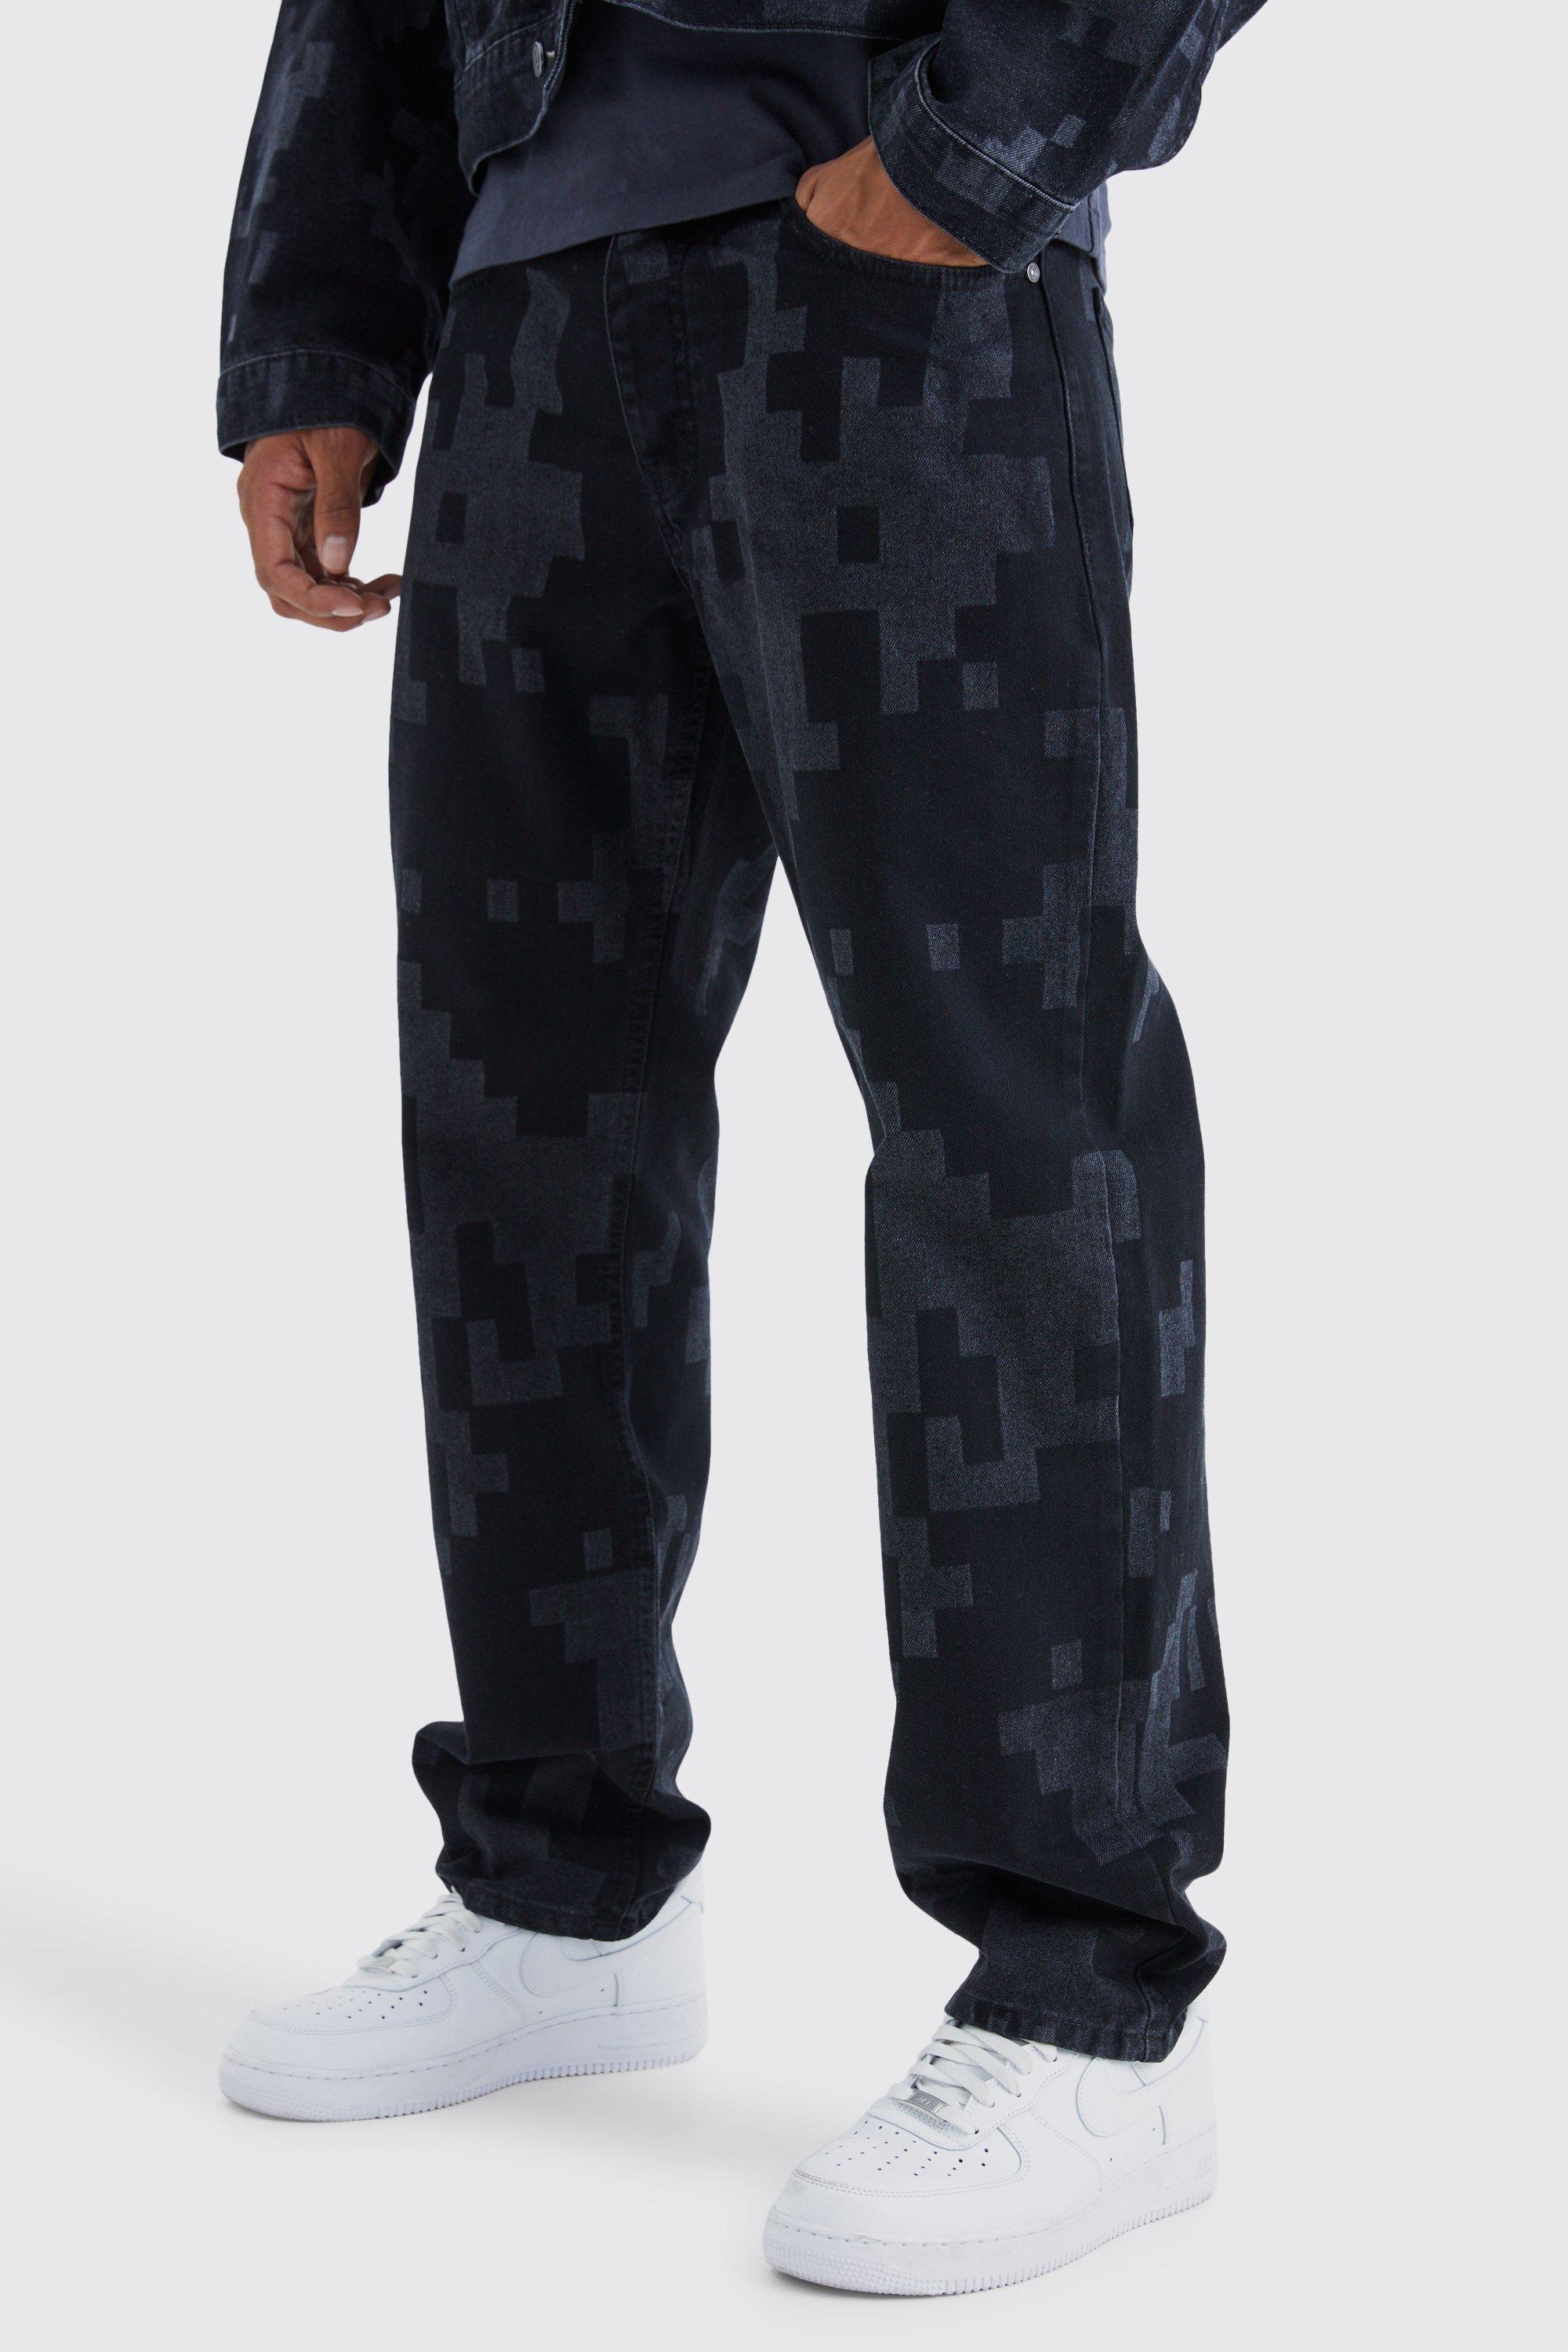 Lockere Camouflage Jeans mit Laser-Print, Washed black